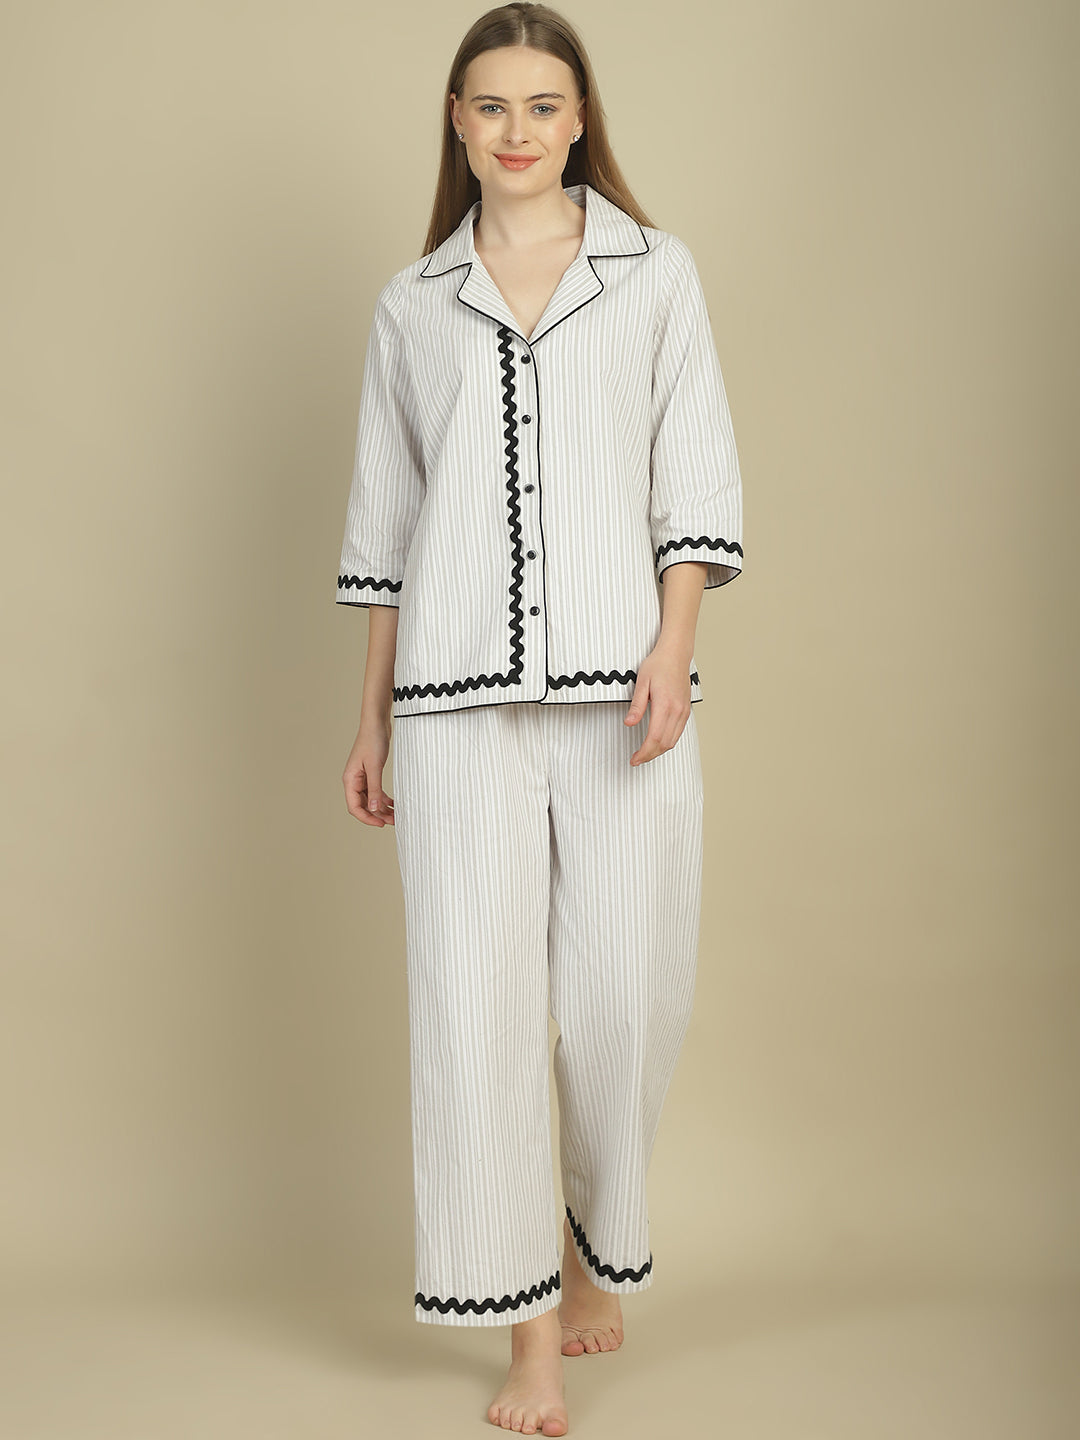 Blanc9 Contrast Black Lace Grey & White Stripes Nightwear